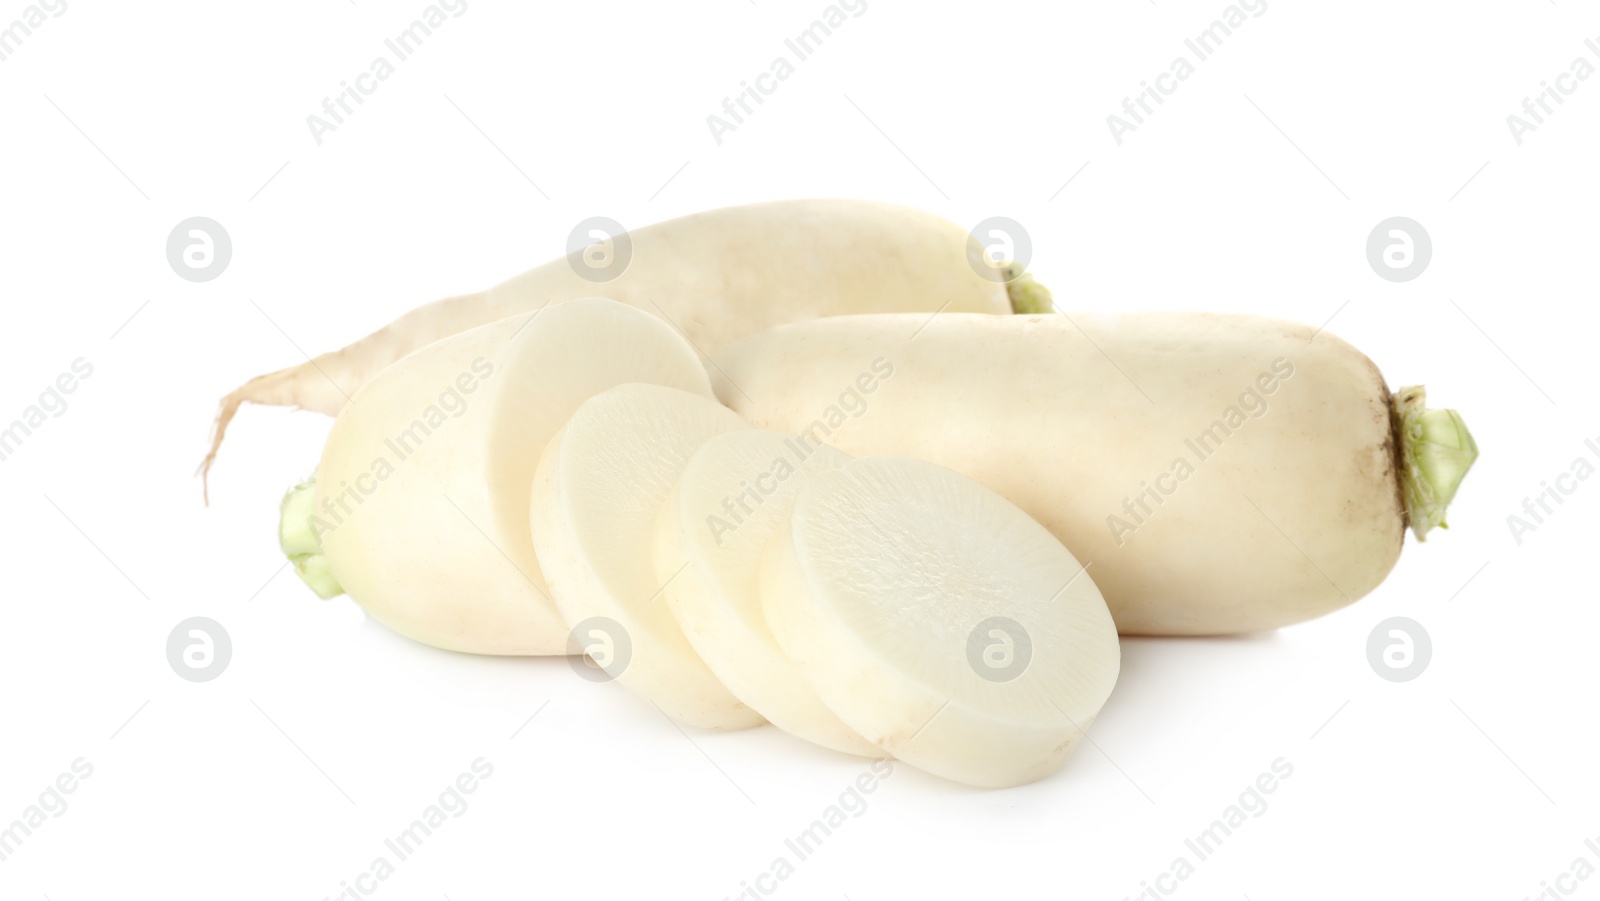 Photo of Whole and cut fresh ripe turnips on white background